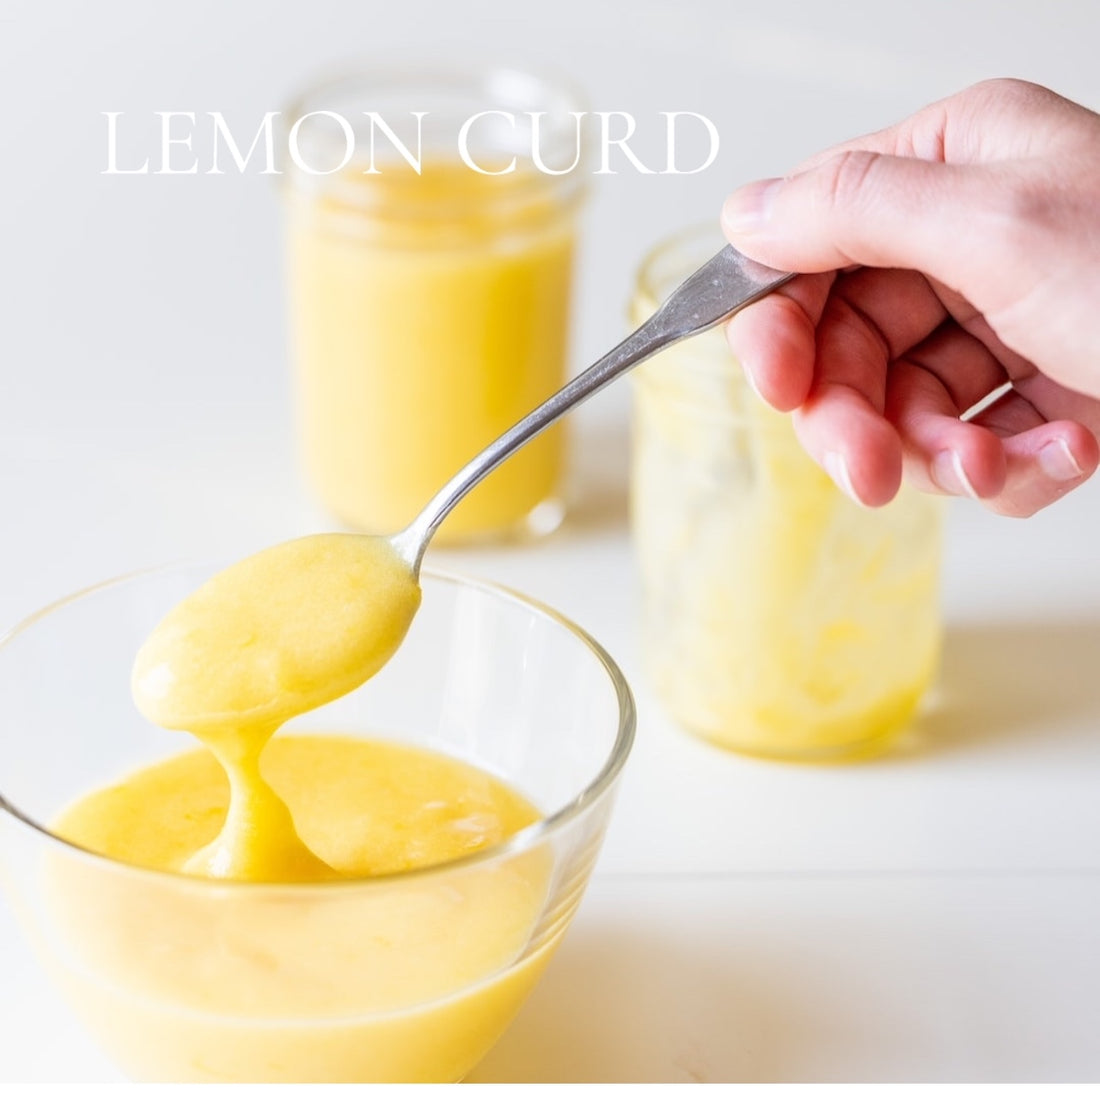 WHEN LIFE GIVES YOU LEMONS - 7 Different Lemon Perfume Scent Samples